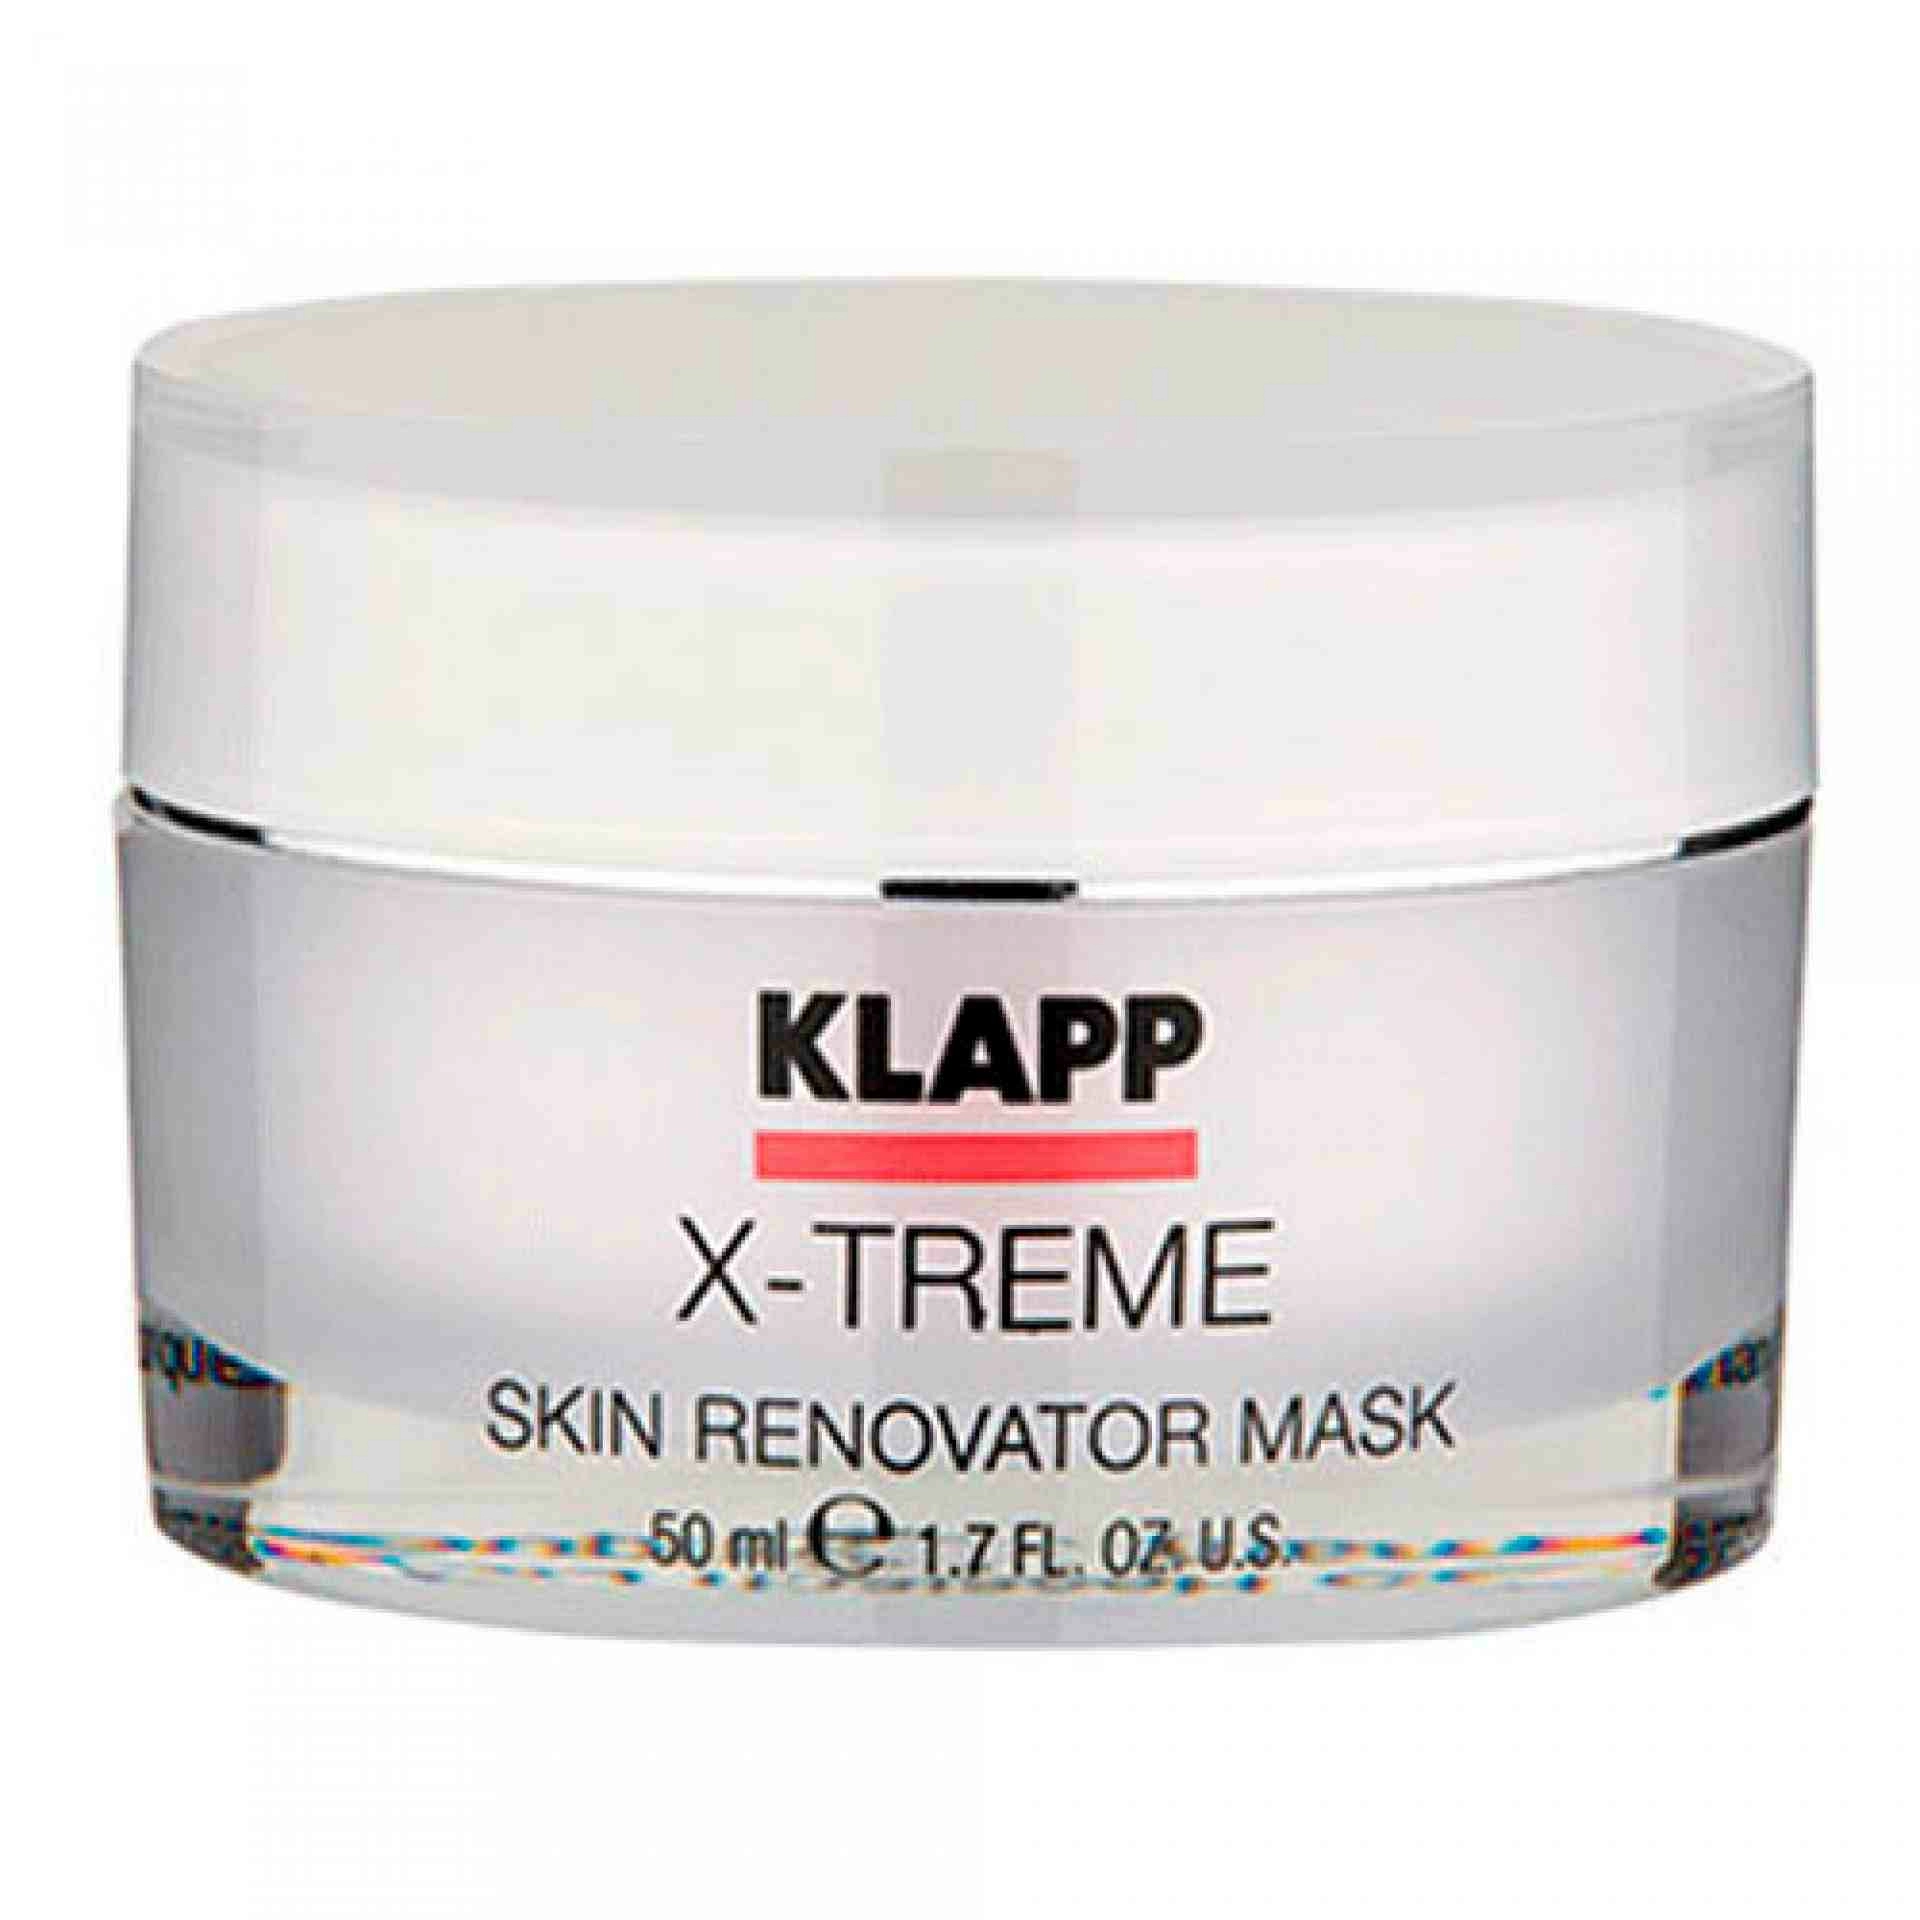 Skin Renovator Mask | Mascarilla Renovadora 50ml - X-Treme - Klapp ®